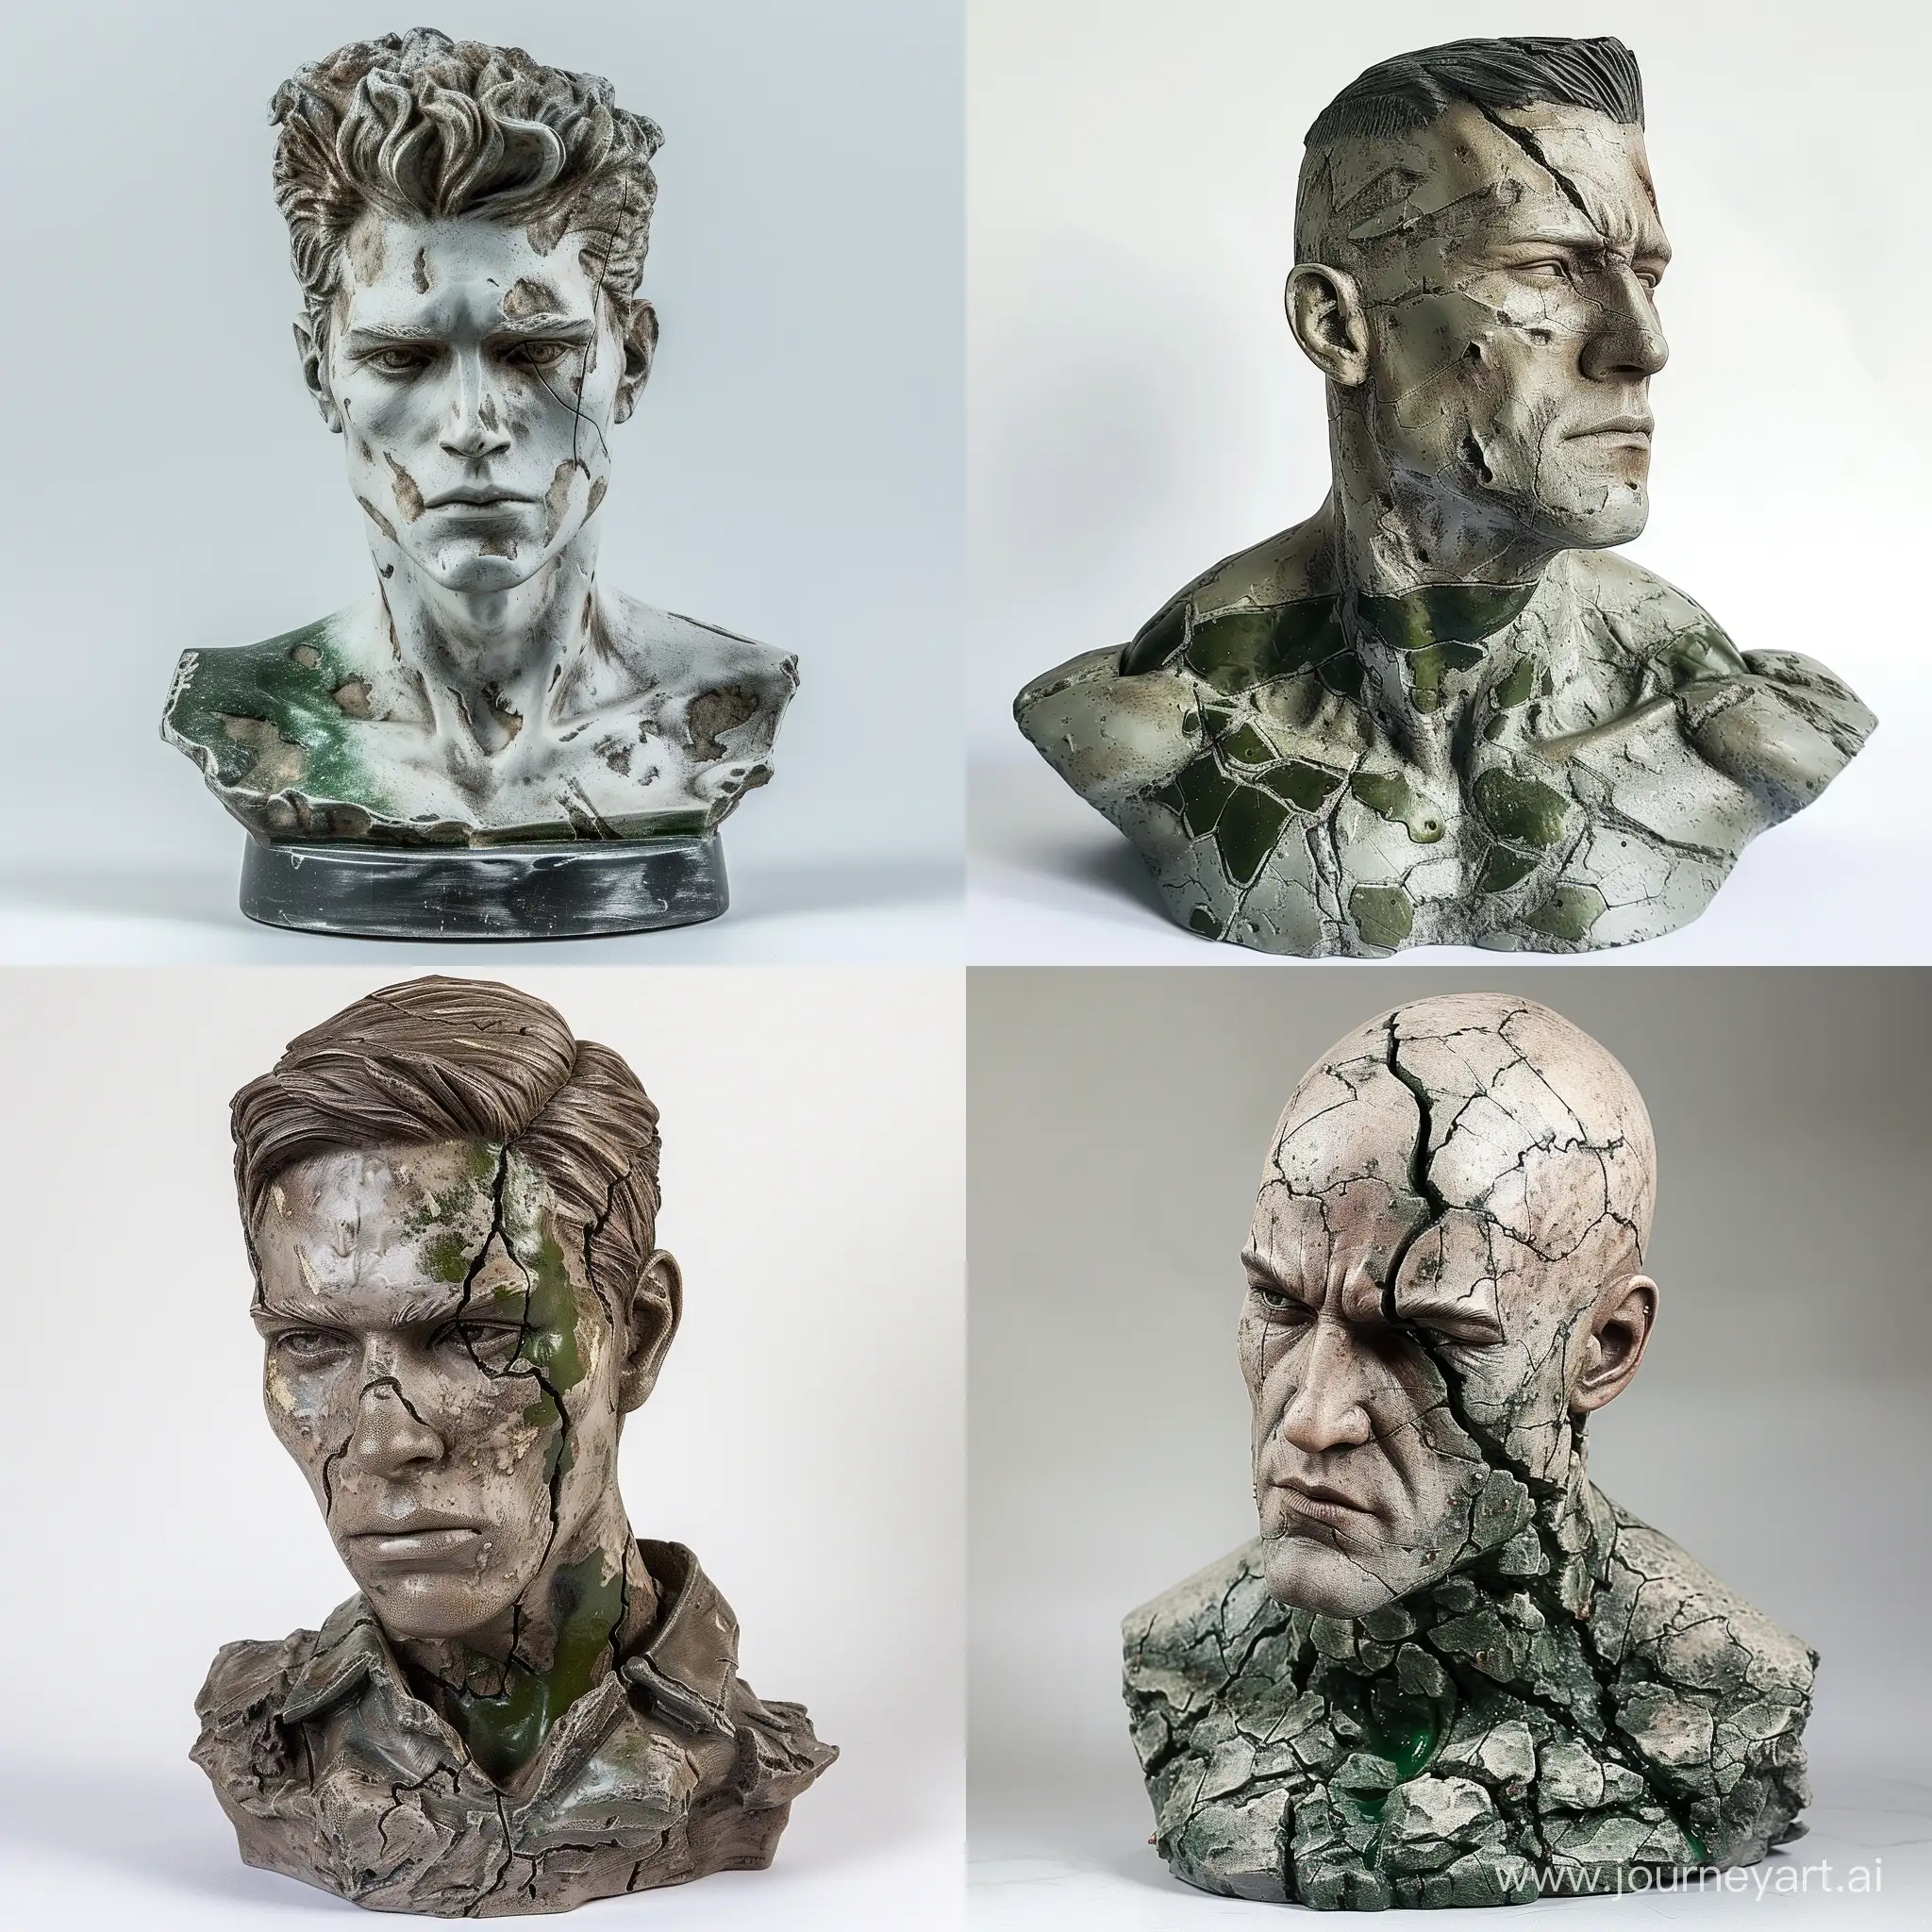 A Sculpture of Men, Bust Style, Blistered Texture, Hunter Green Splash, Headshot Pose, High Precision